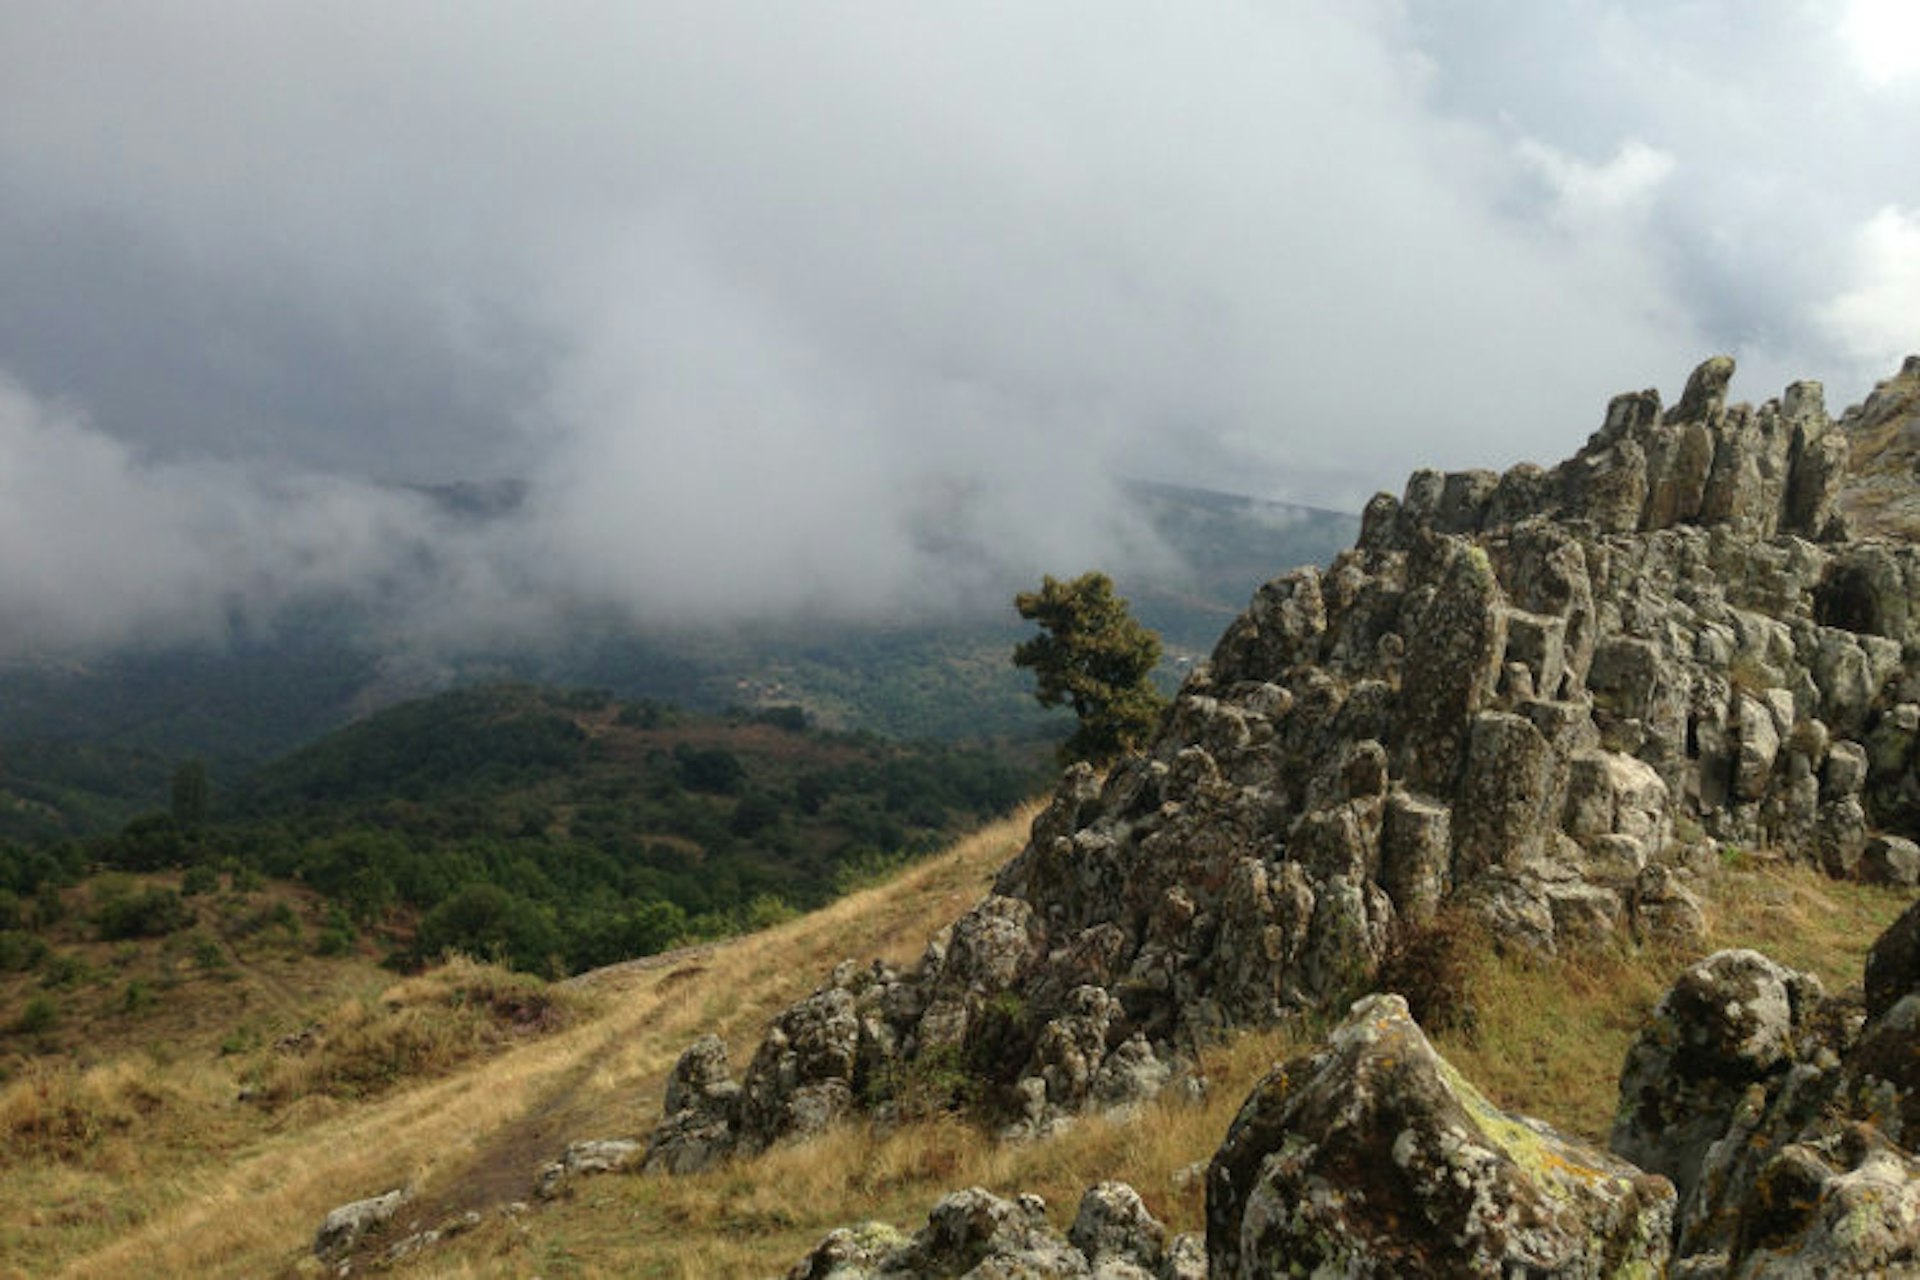 Views from Kokino megalithic observatory, Macedonia. Image by Brana Vladisavljevic / Lonely Planet